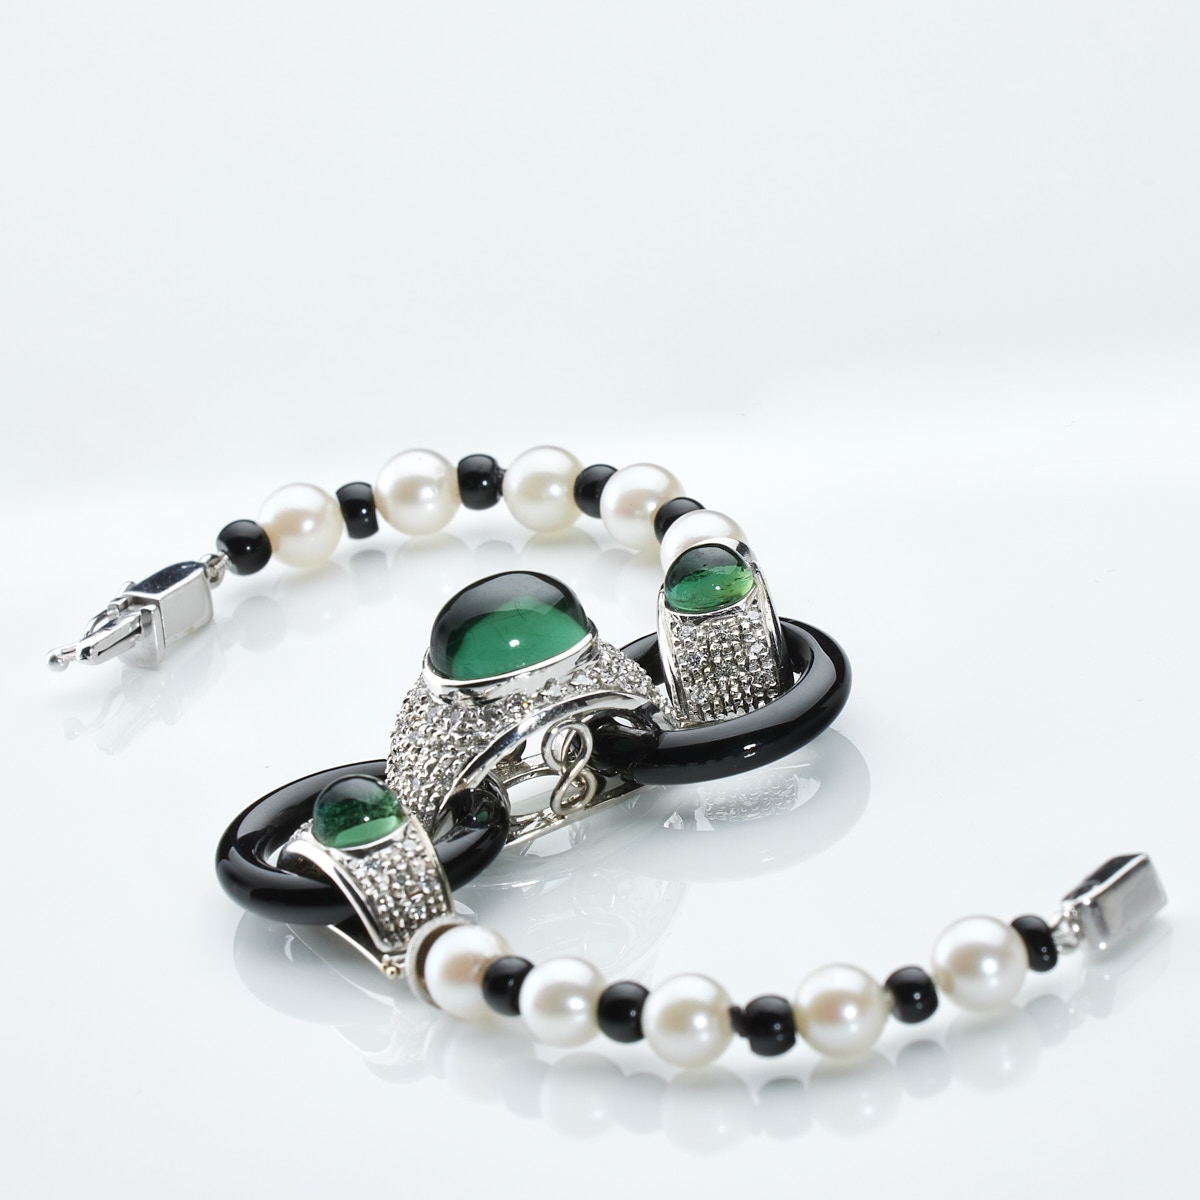 Bezauberndes Turmalin-Armband mit Onyx und Perlen - Image 3 of 3